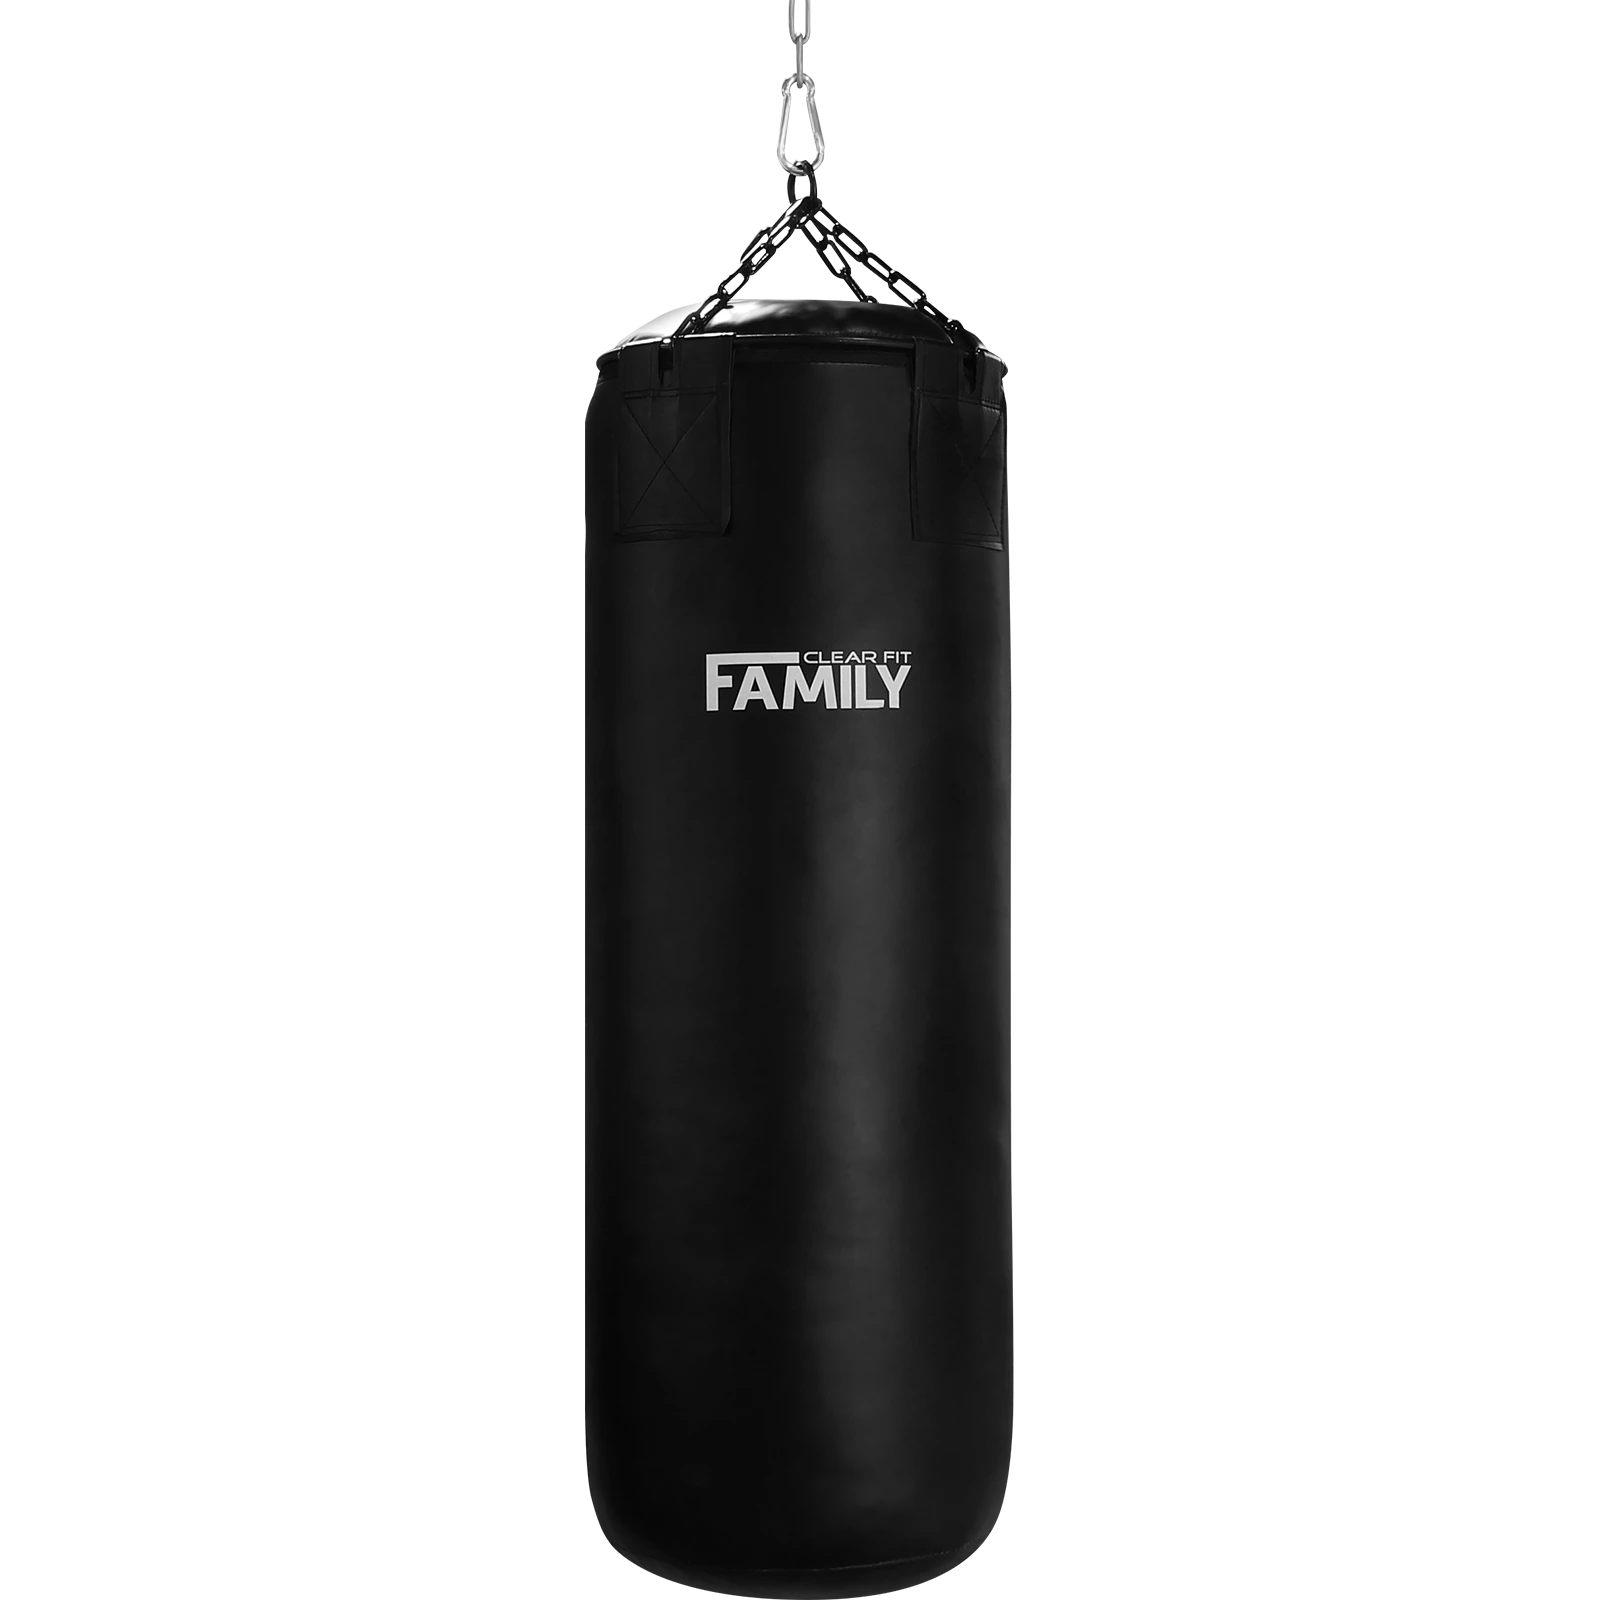 Боксерский мешок Family Professional PNK 60-120